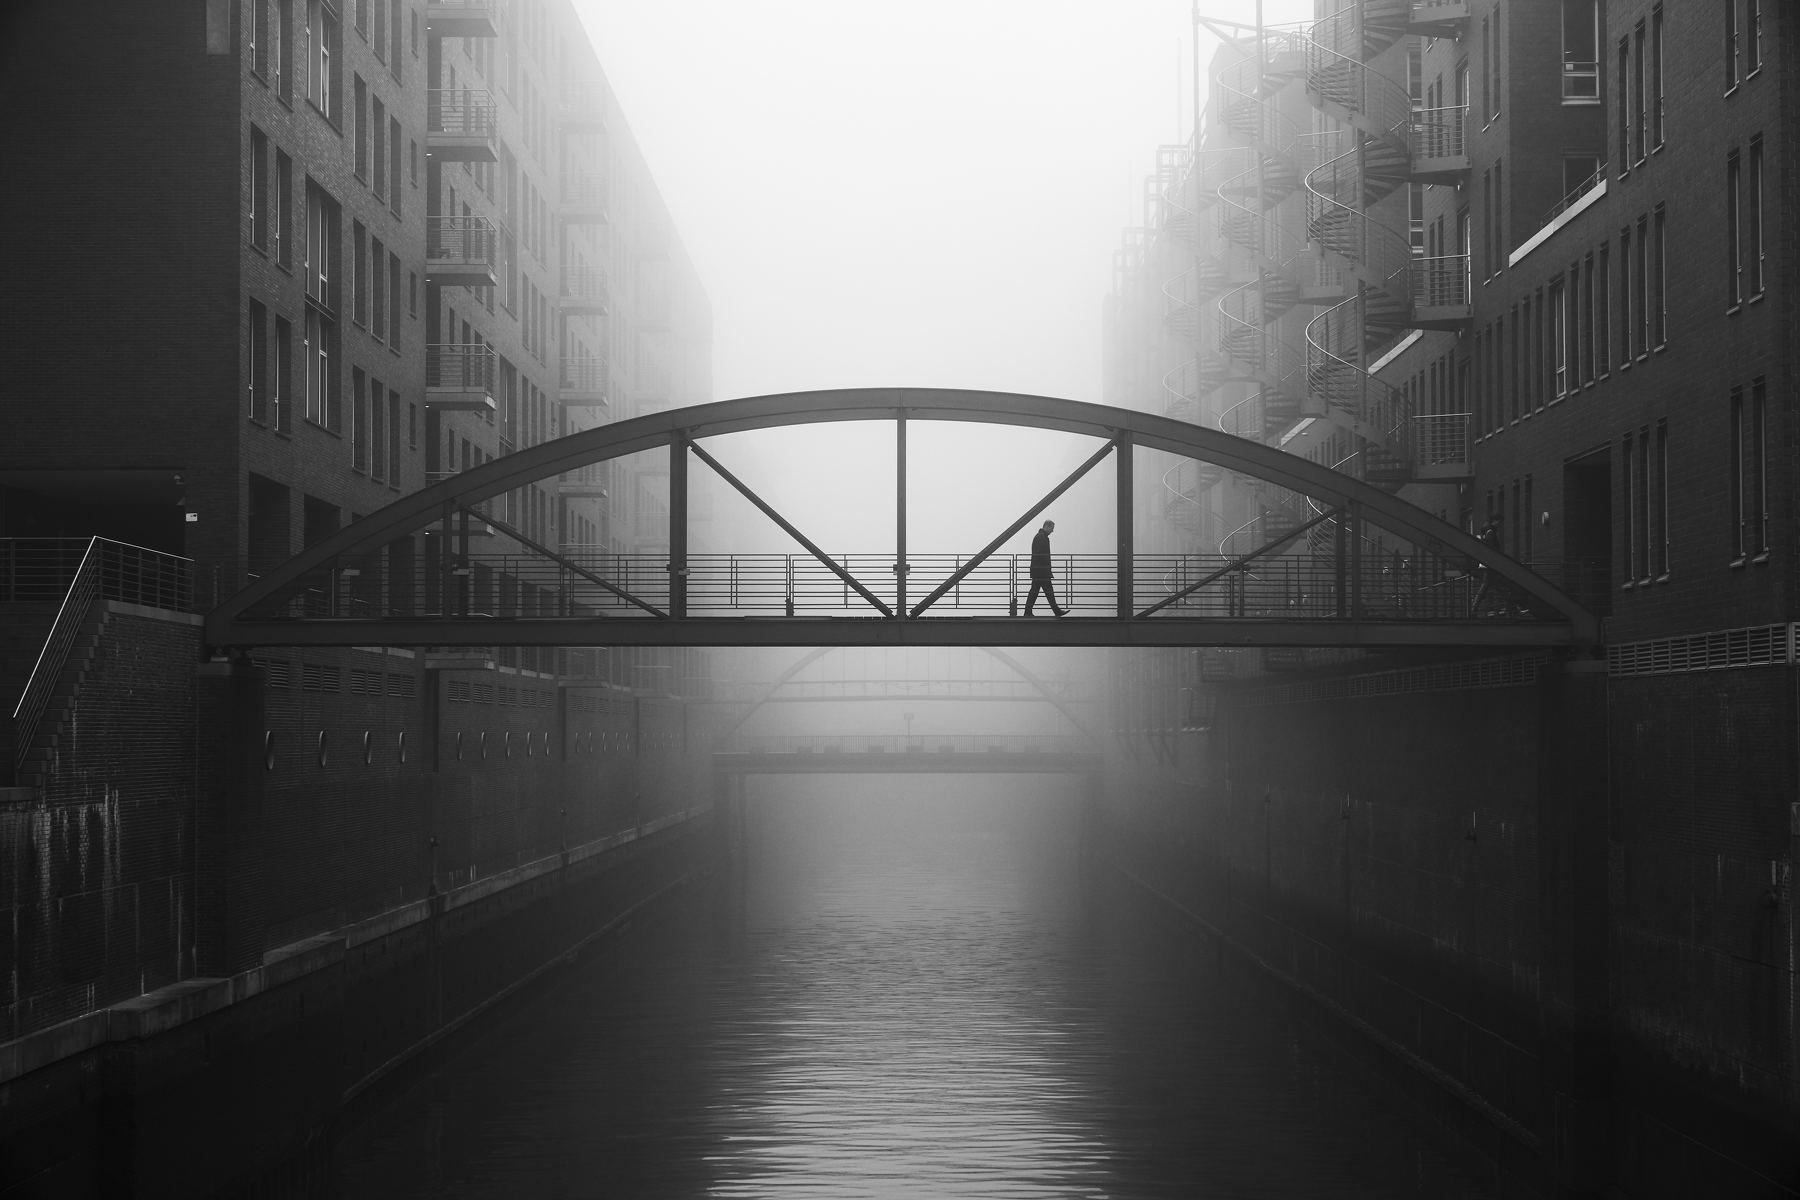 Architecture Hamburg Alexander Schonberg City Germany Men Mist Walking Bridge Stairs River Water Bui 1800x1200